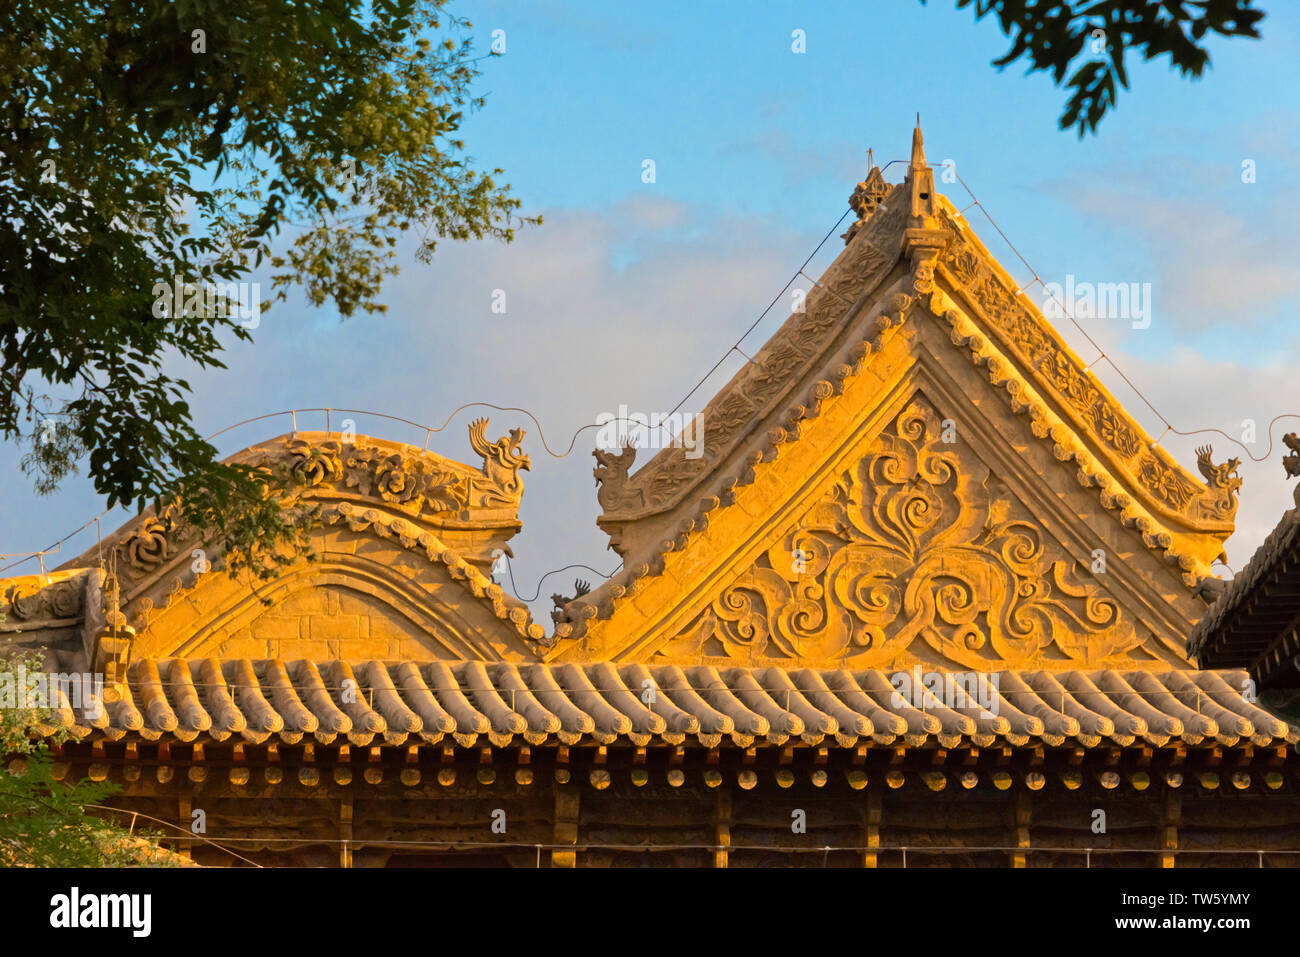 Detalles arquitectónicos de Dafo (Gran Buda) Templo, Zhangye, provincia de Gansu, China Foto de stock